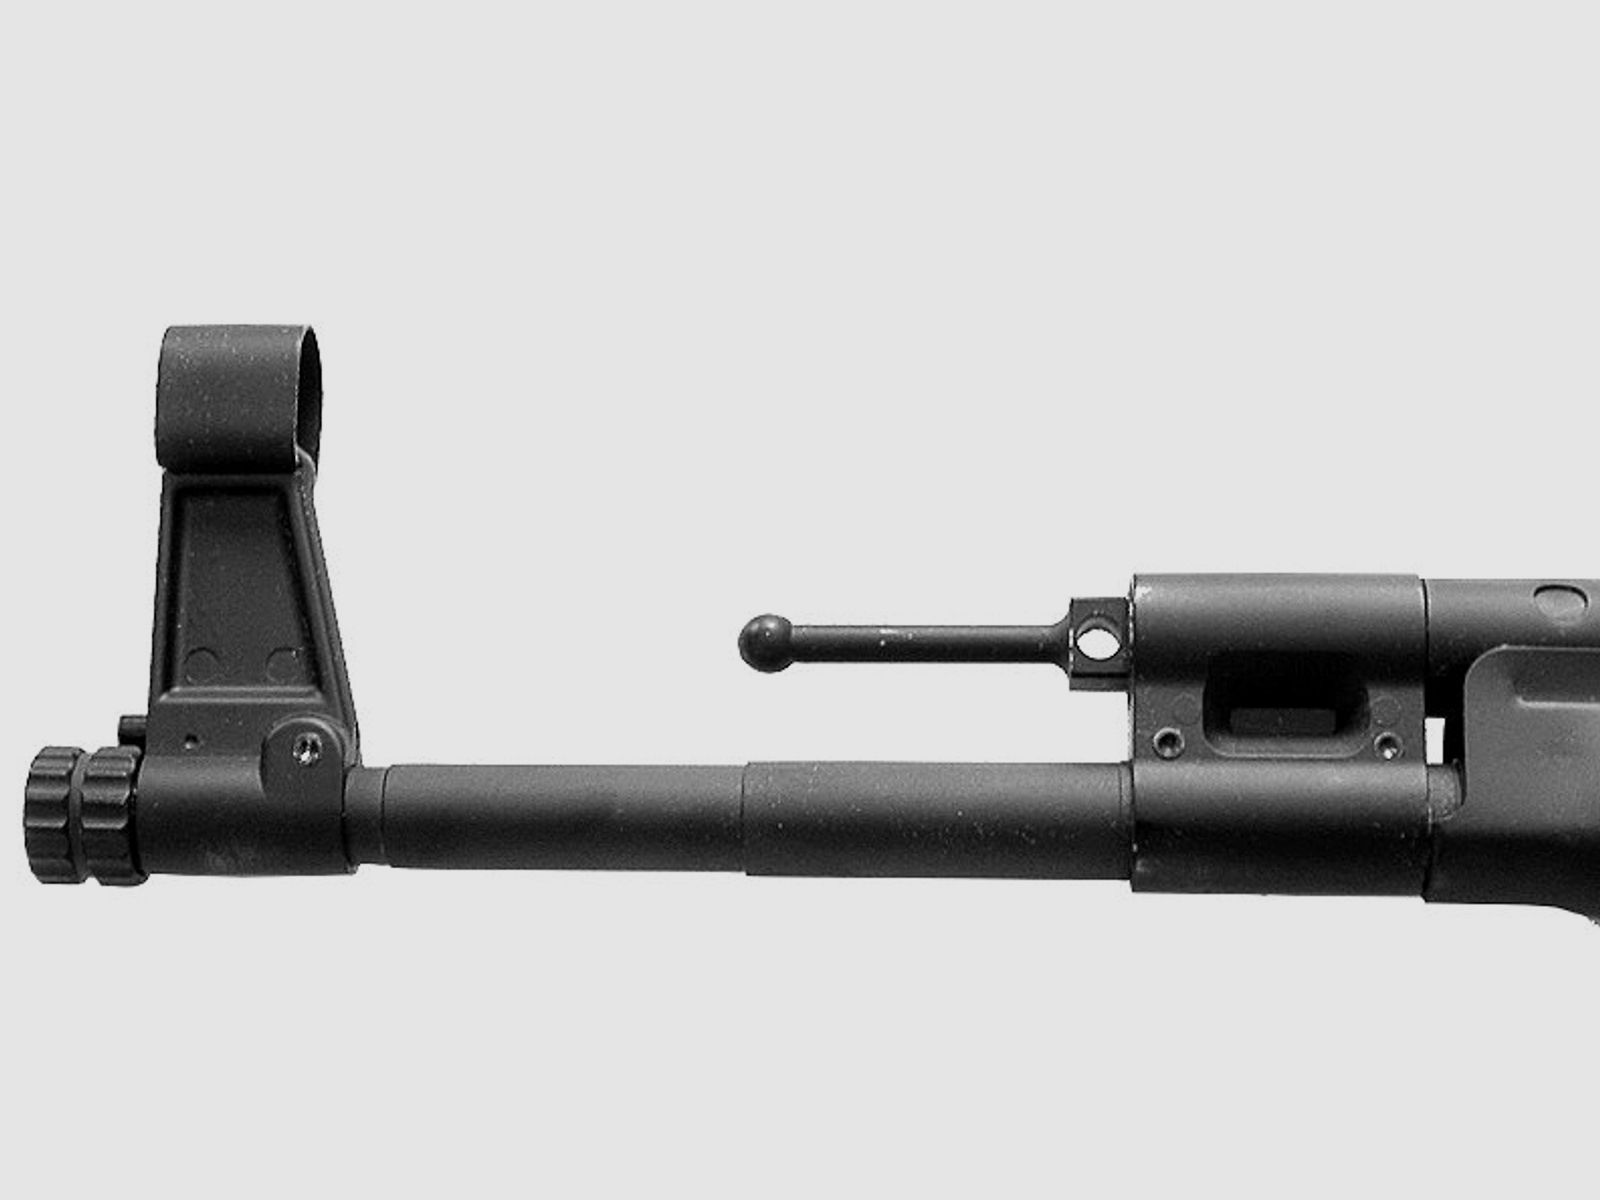 MP43 R SNIPER Prototype MP44 Sturmgewehr STG Shoei Modelwaffe